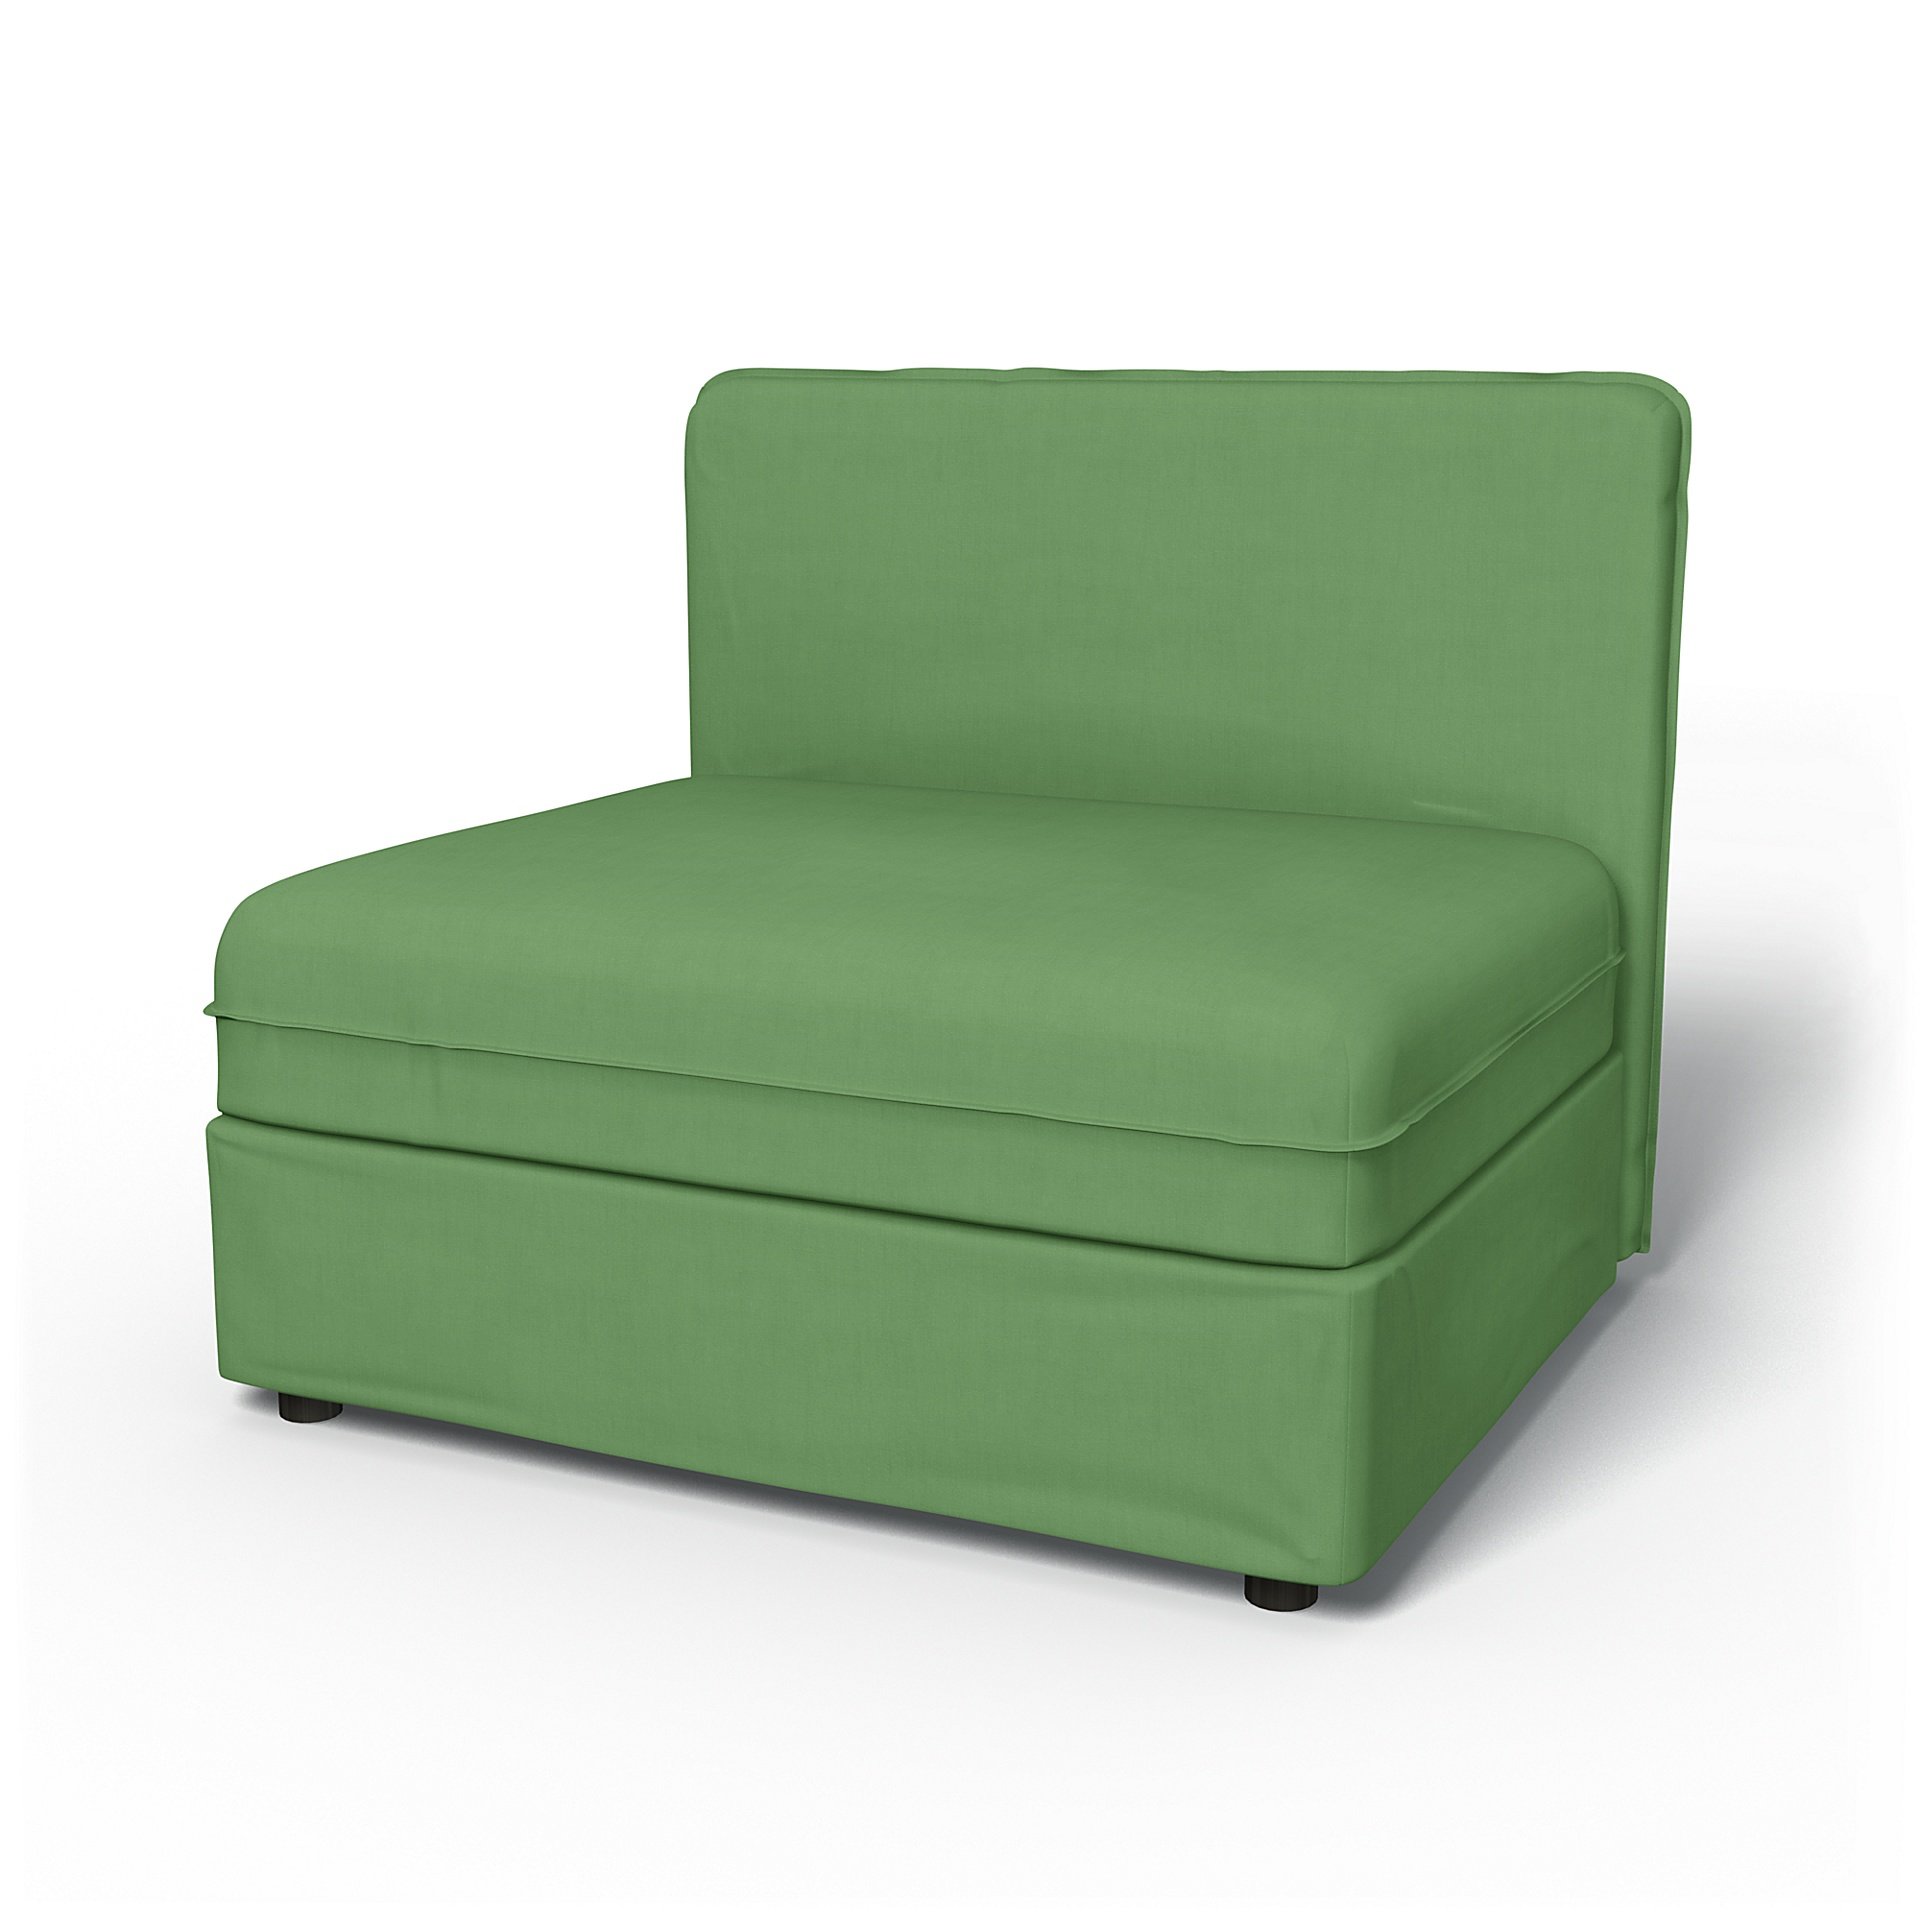 IKEA - Vallentuna Seat Module with Low Back Cover 100x80cm 39x32in, Apple Green, Linen - Bemz